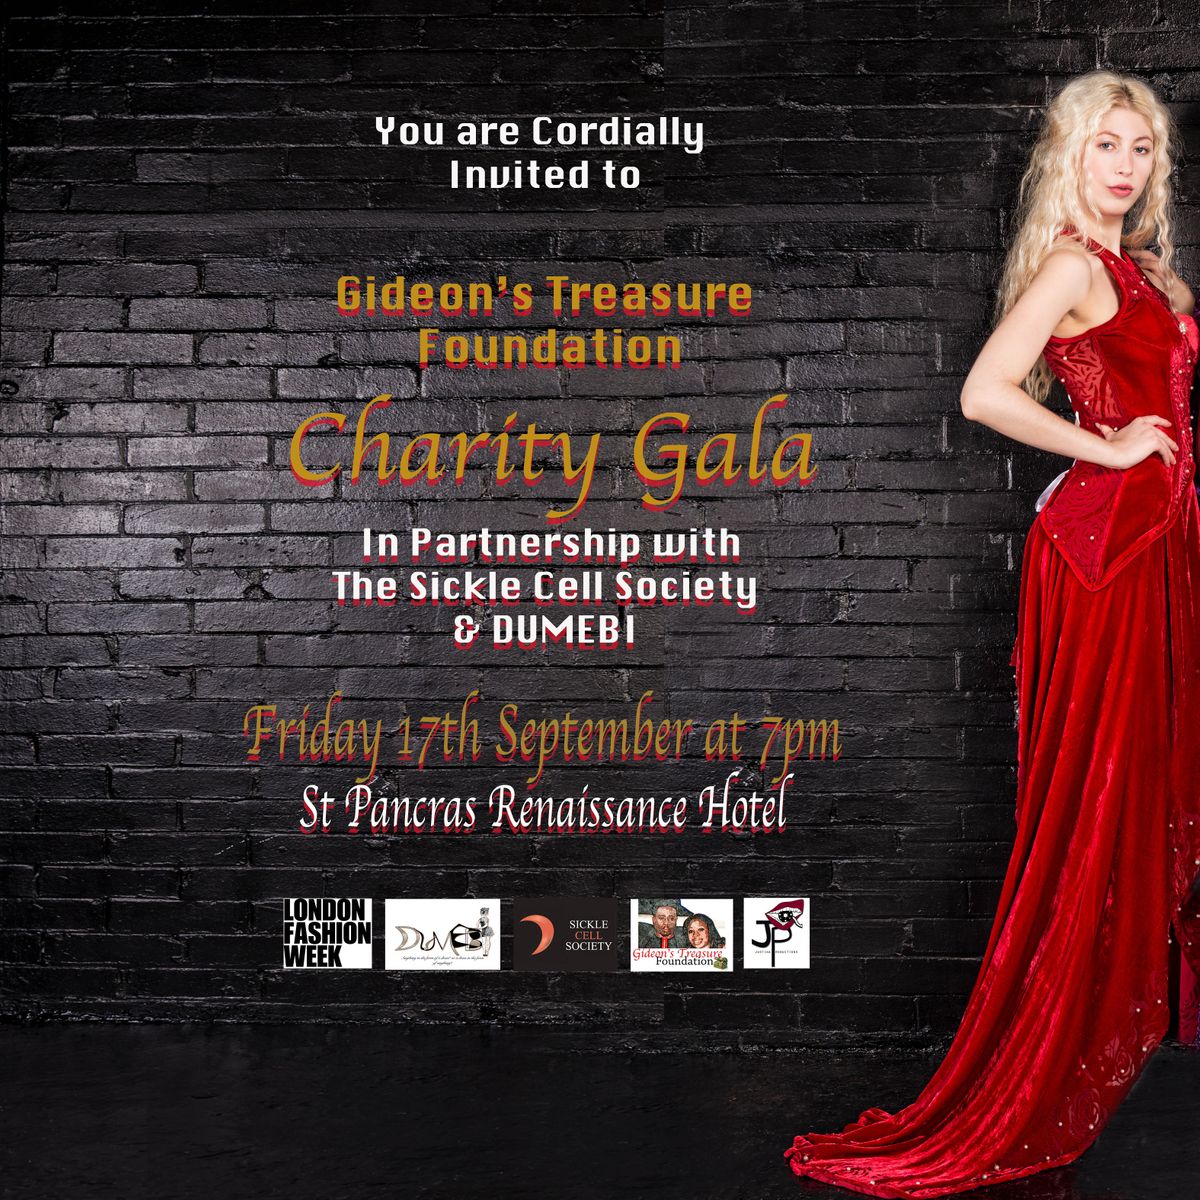 Gideon's Treasure London Fashion Week Charity Gala